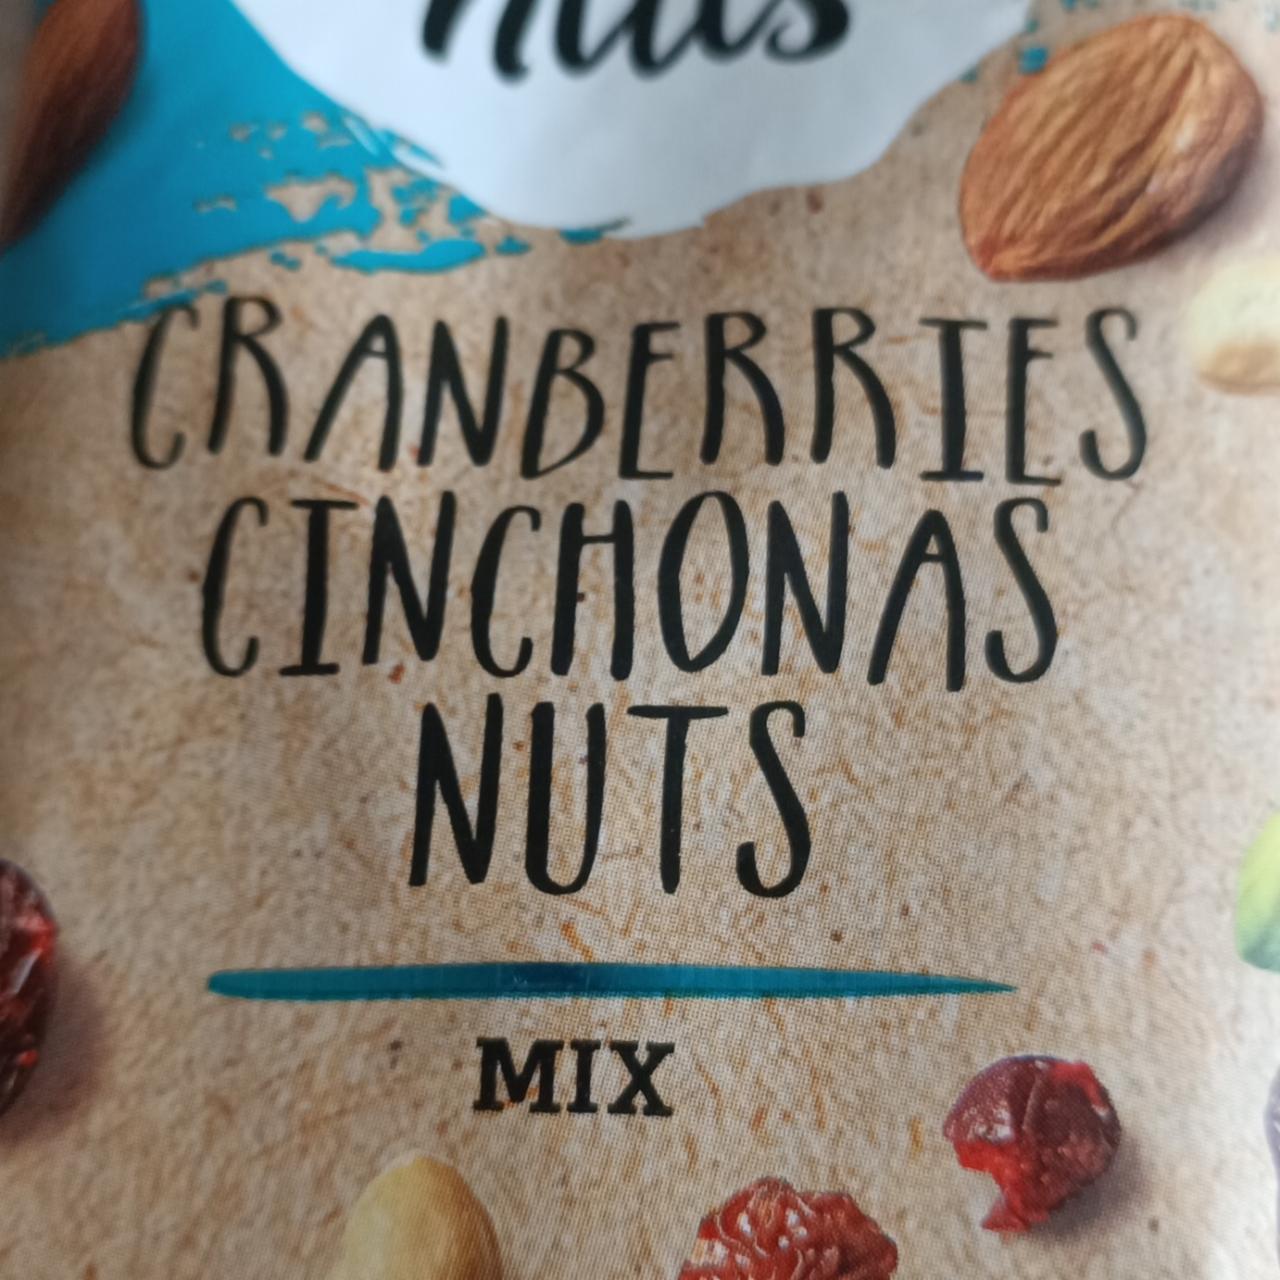 Fotografie - Go Nuts Mix Cranberries Cinchonas Nuts Albert